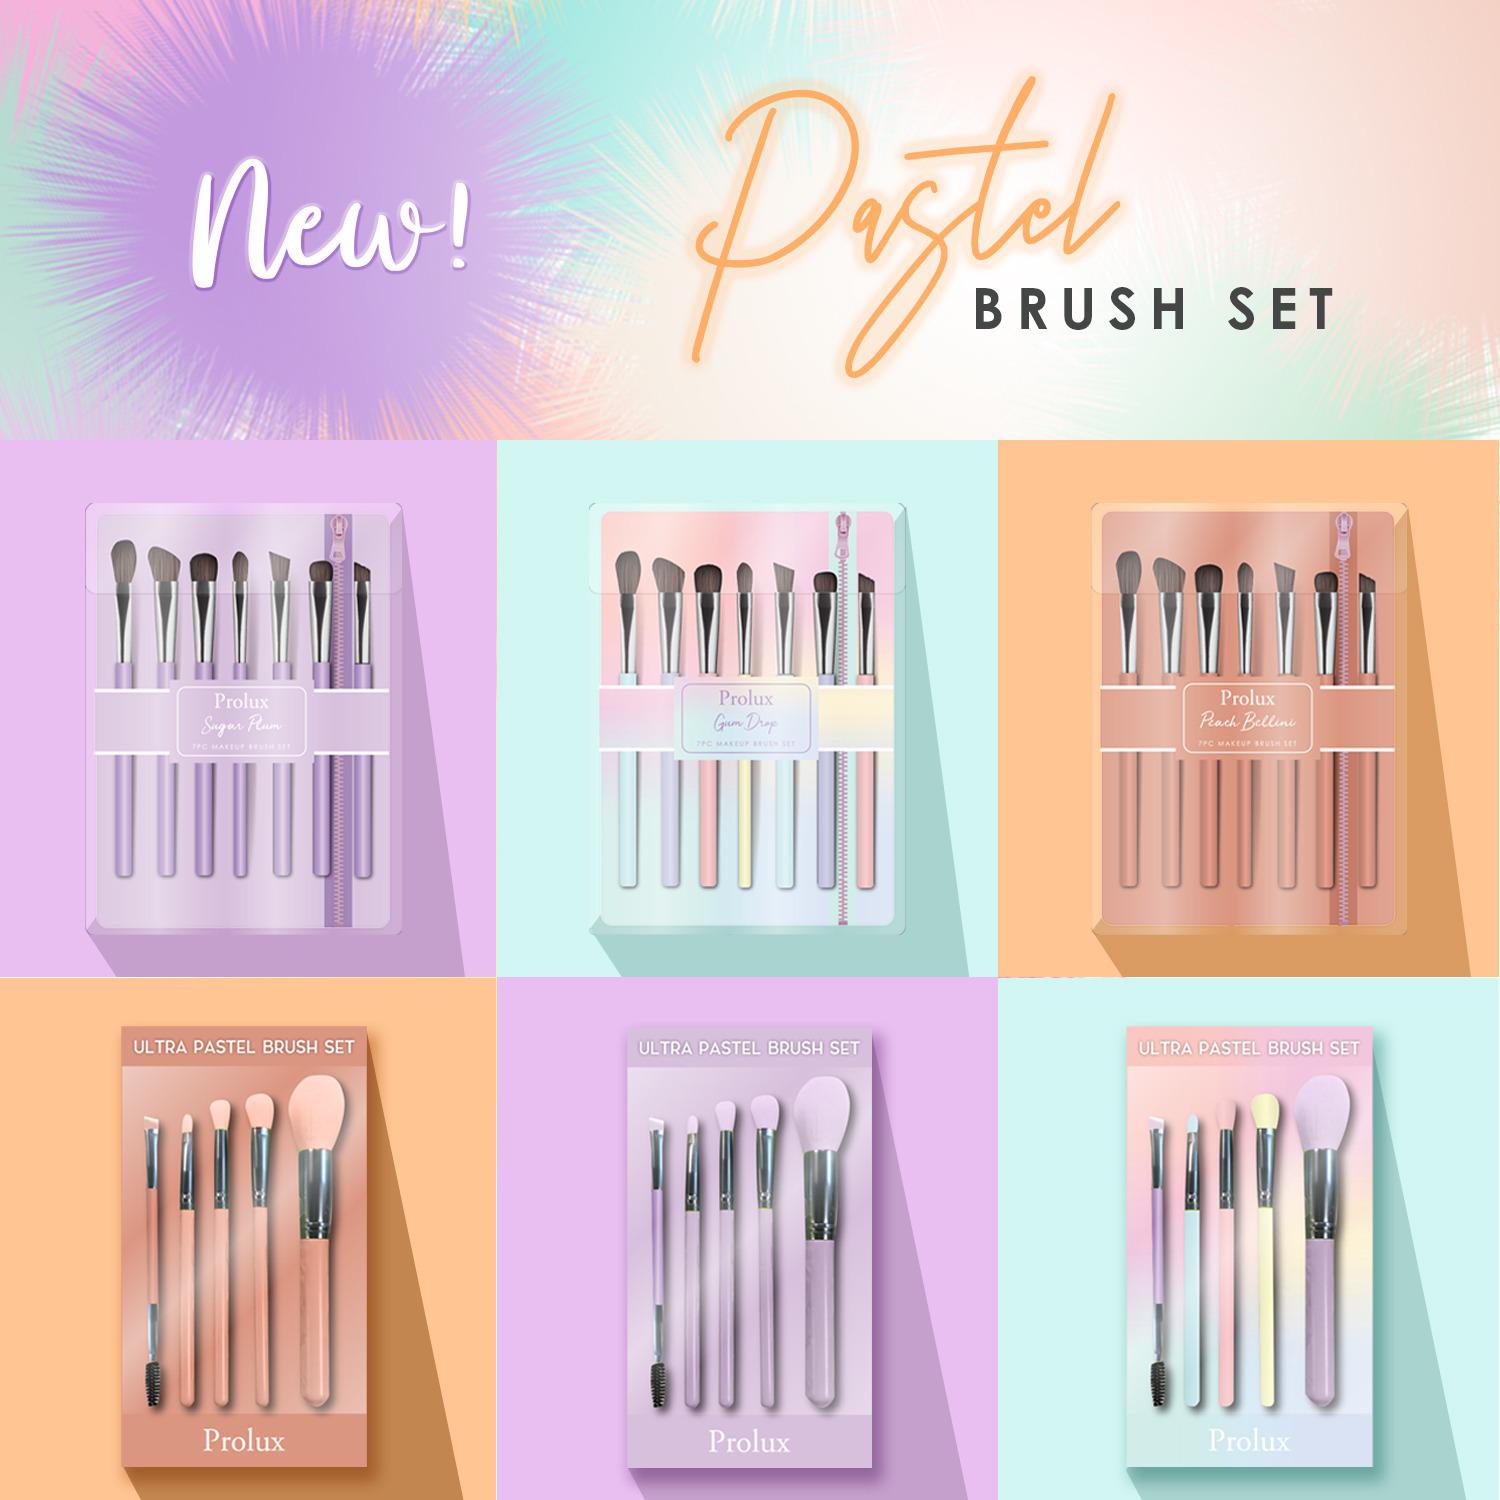 Ultra Pastel Brush Set